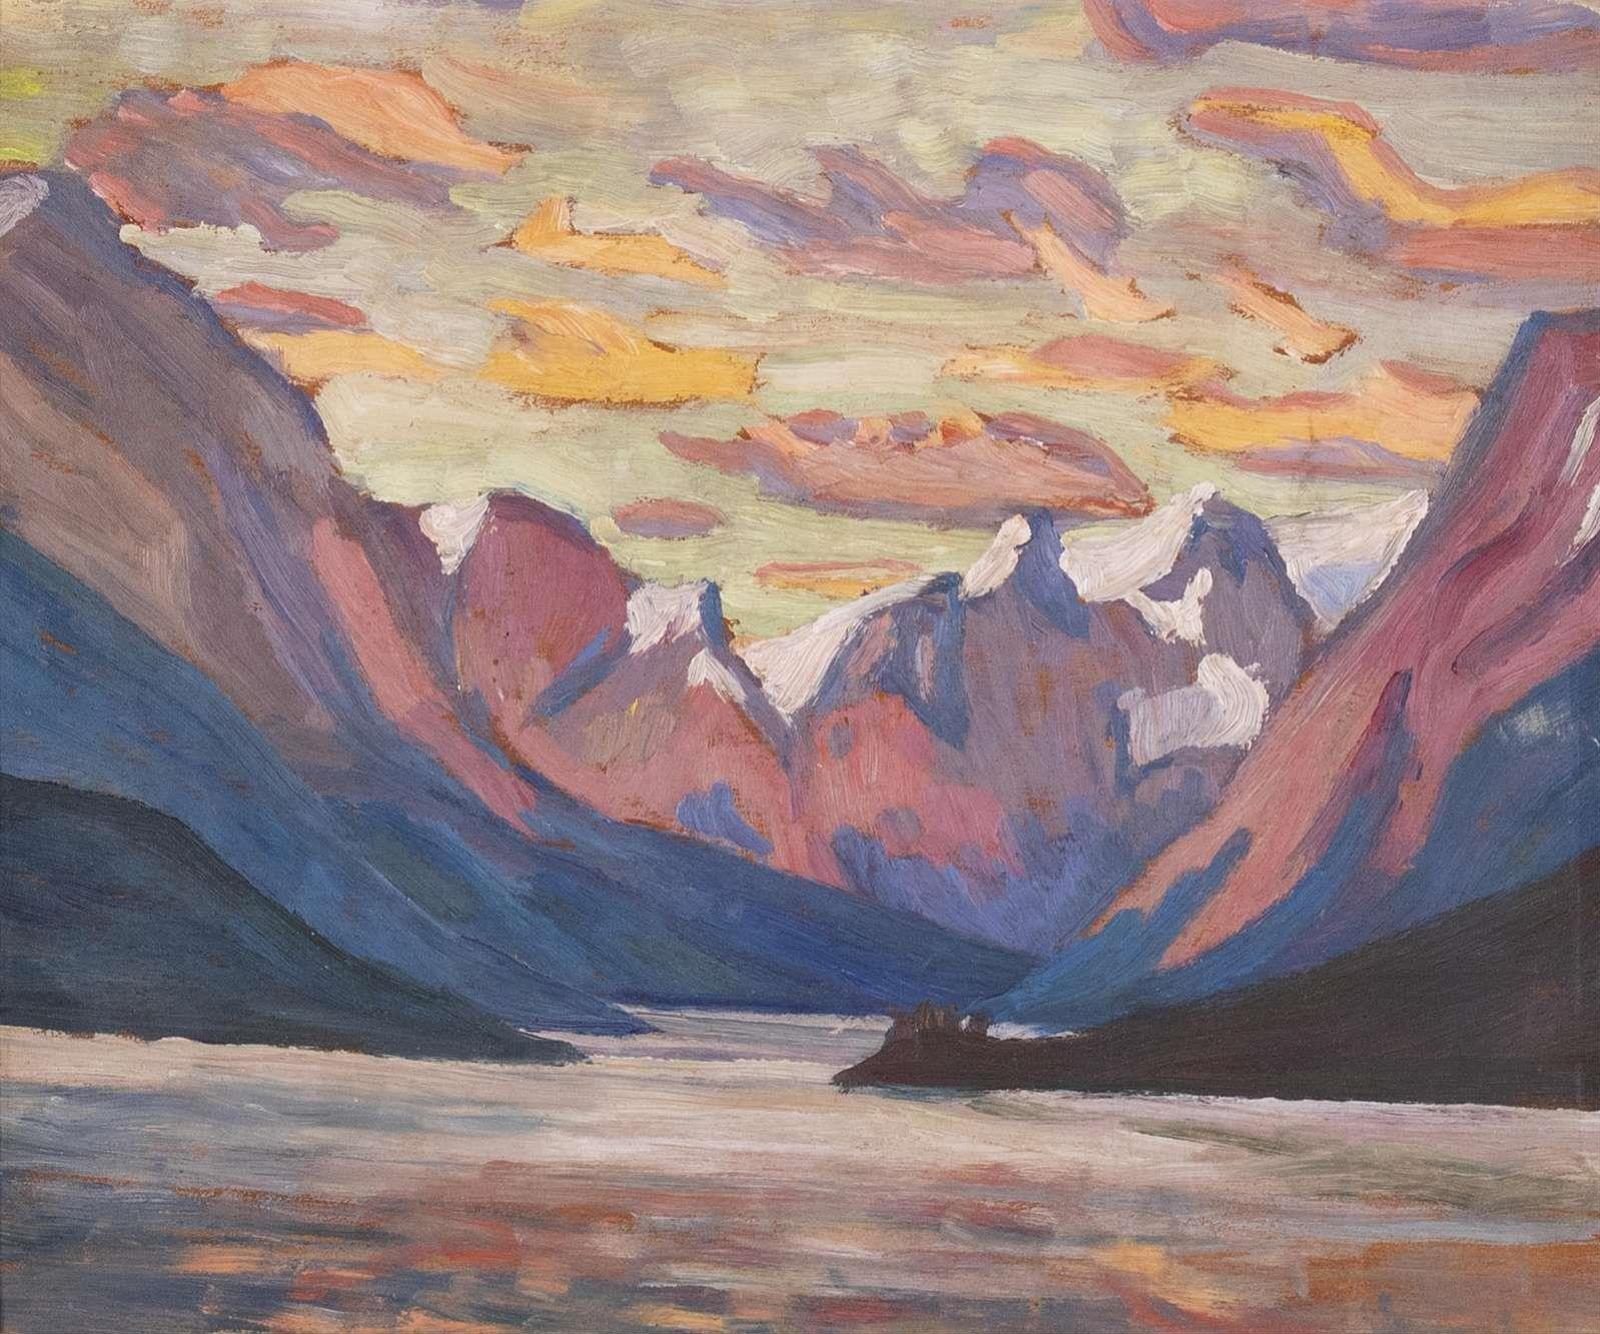 Sir Frederick Grant Banting (1891-1941) - Peaks In Jasper National Park; 1925